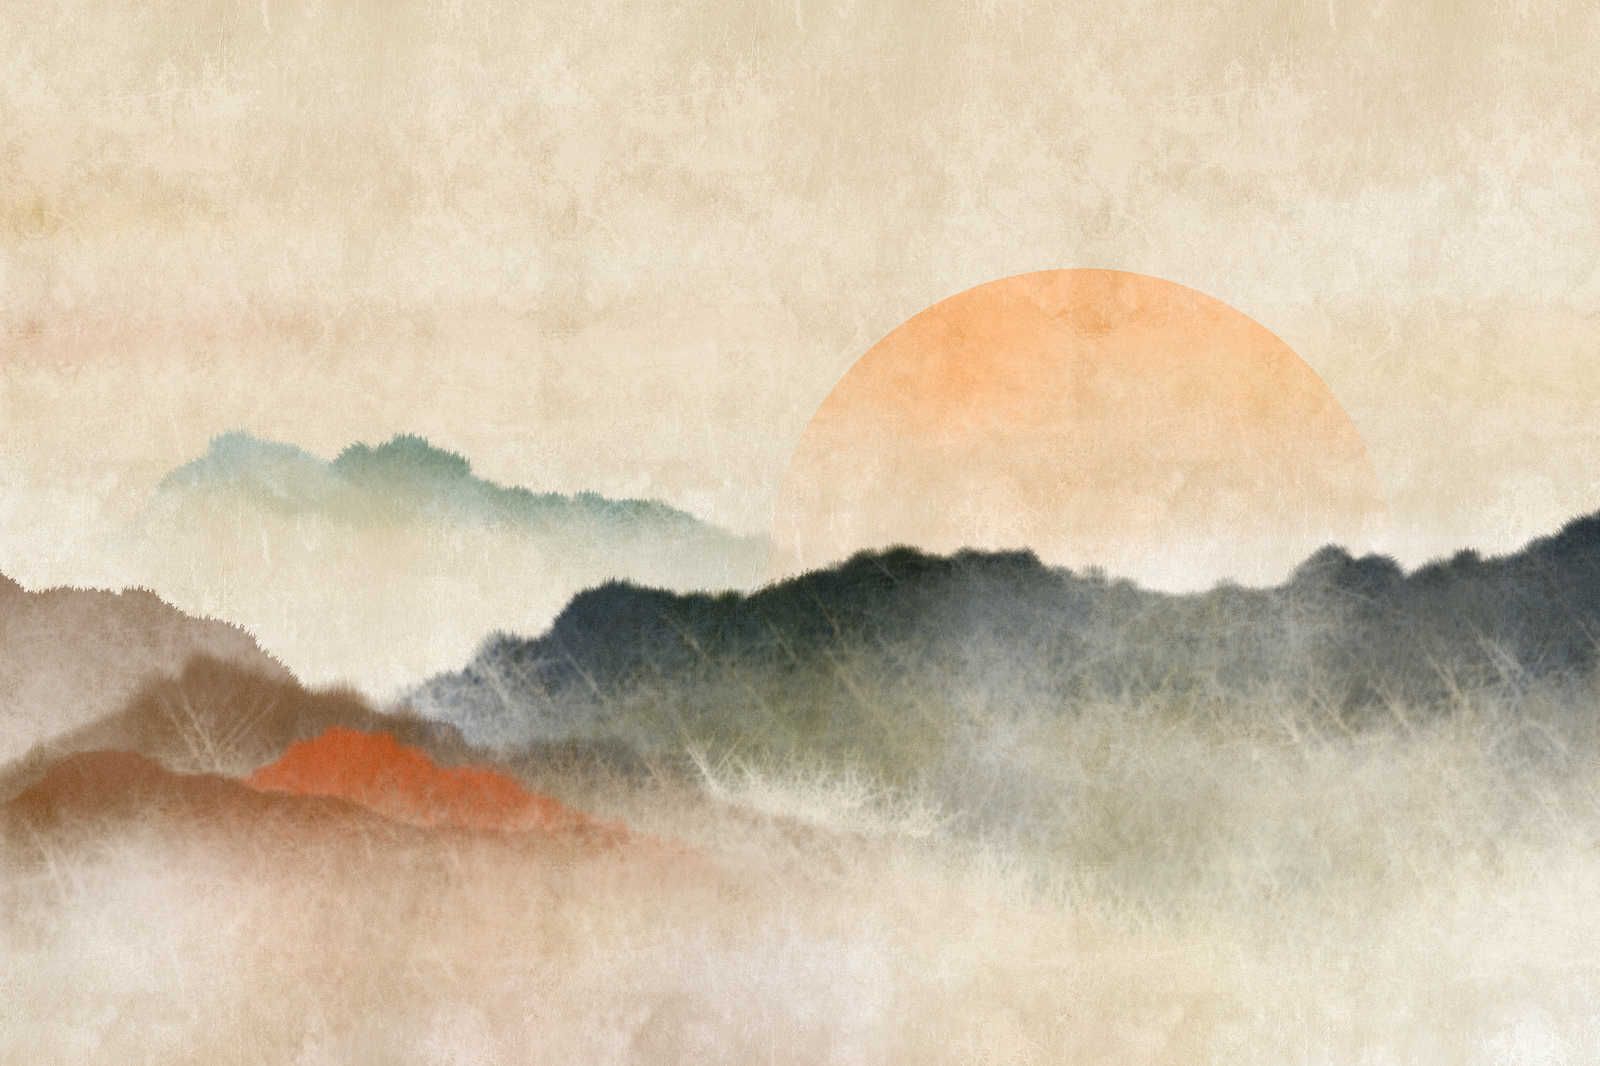             Akaishi 3 - Canvas painting Sunrise, Asia Style Art Print - 0.90 m x 0.60 m
        